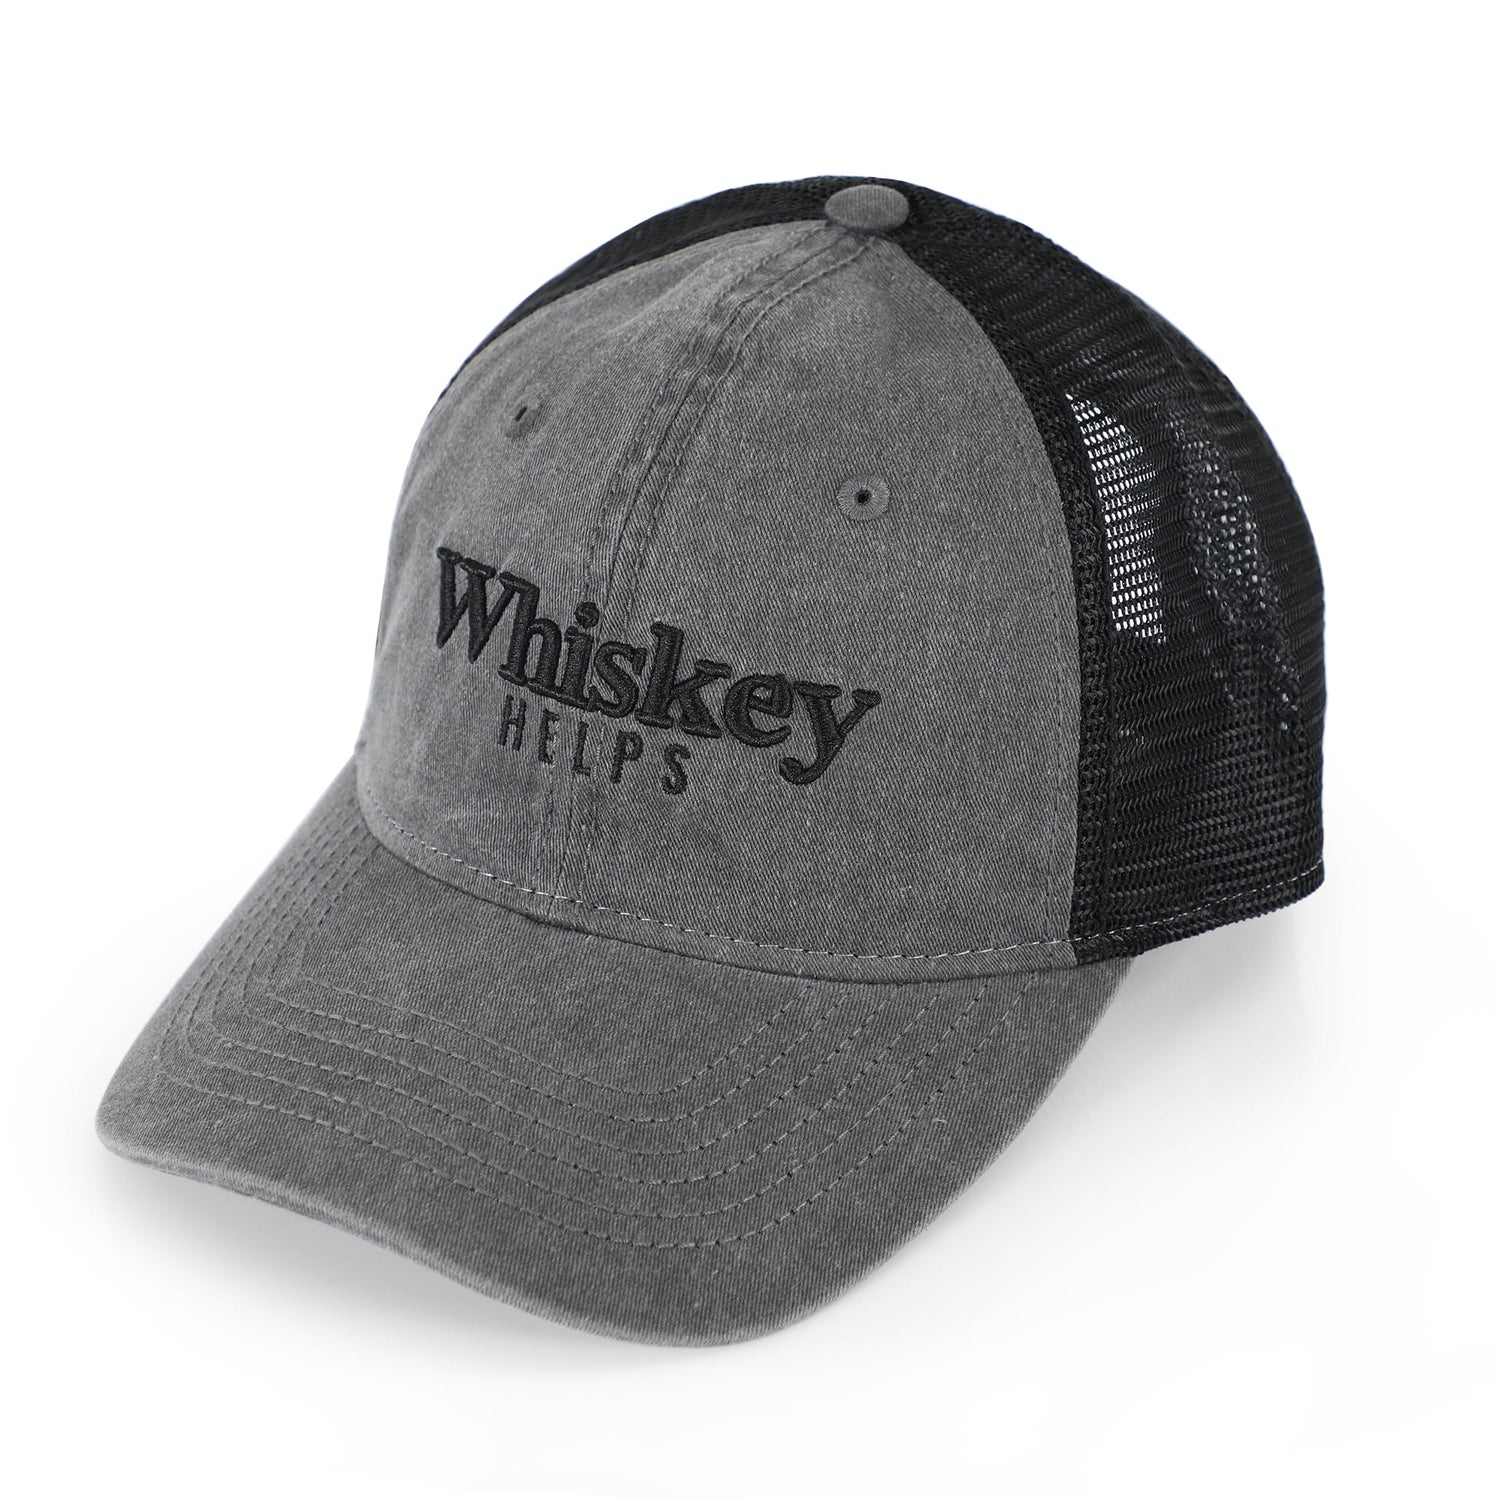 Snapback Whiskey Helps‚Ñ¢ Hat | Grunt Style